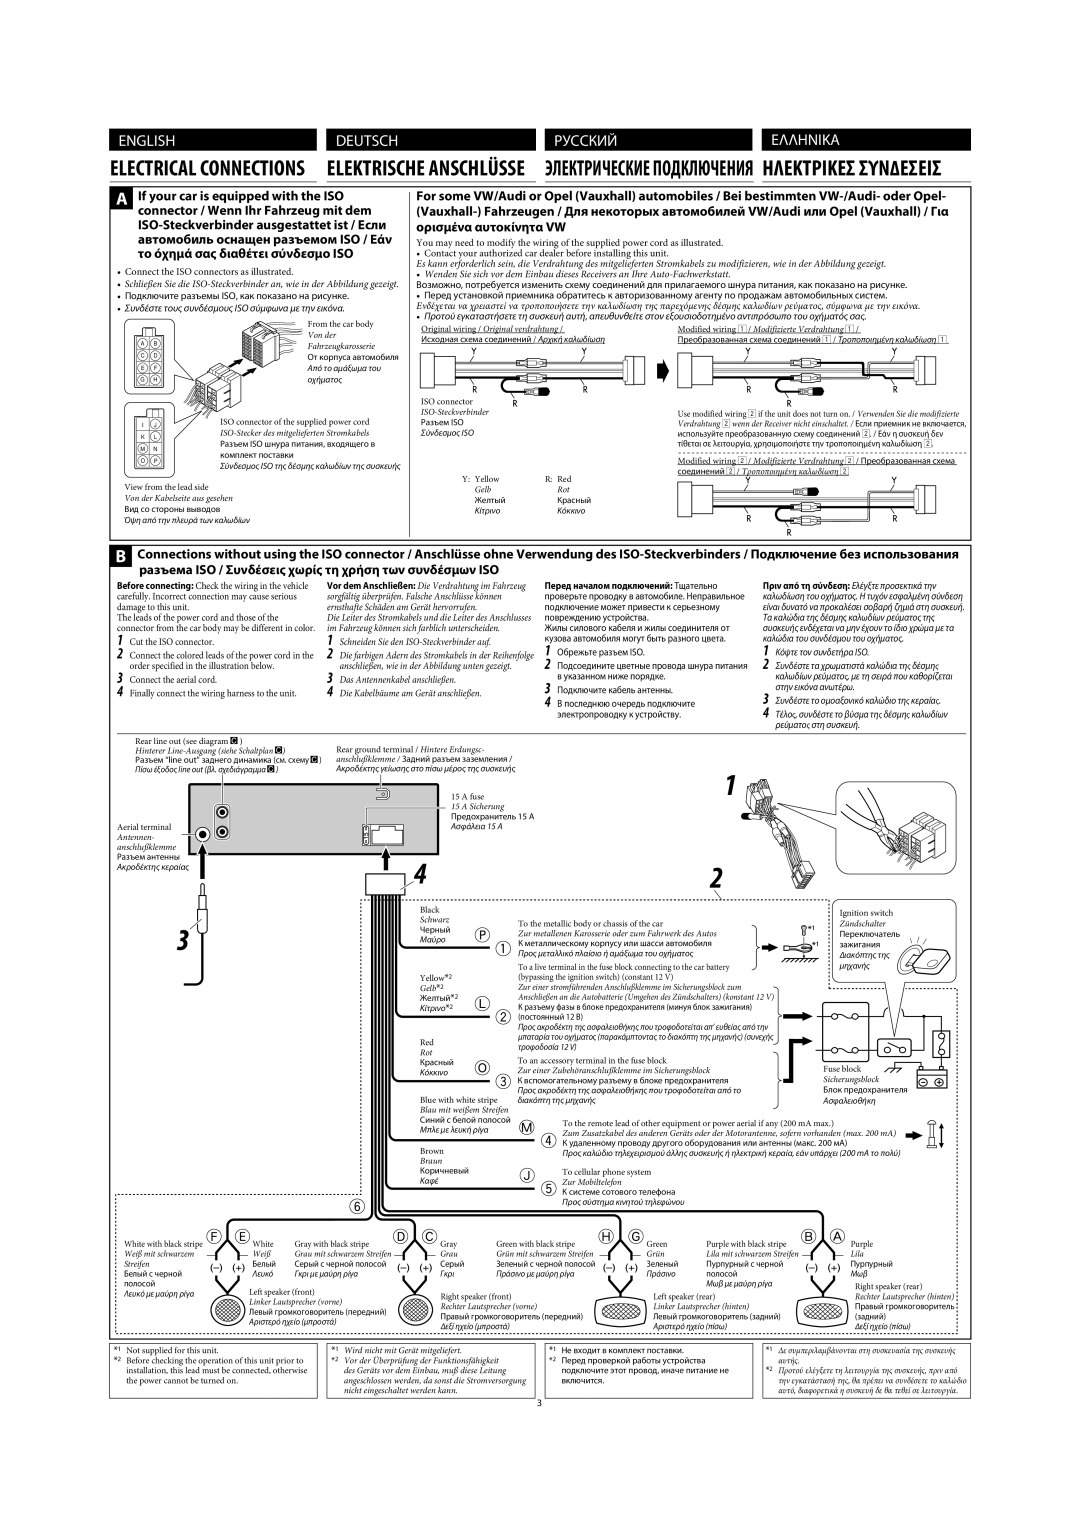 JVC KD-R301 manual Русский, Электрические Подключения Ηλεκτρικεσ Συν∆Εσεισ, Electrical Connections, Elektrische Anschlüsse 